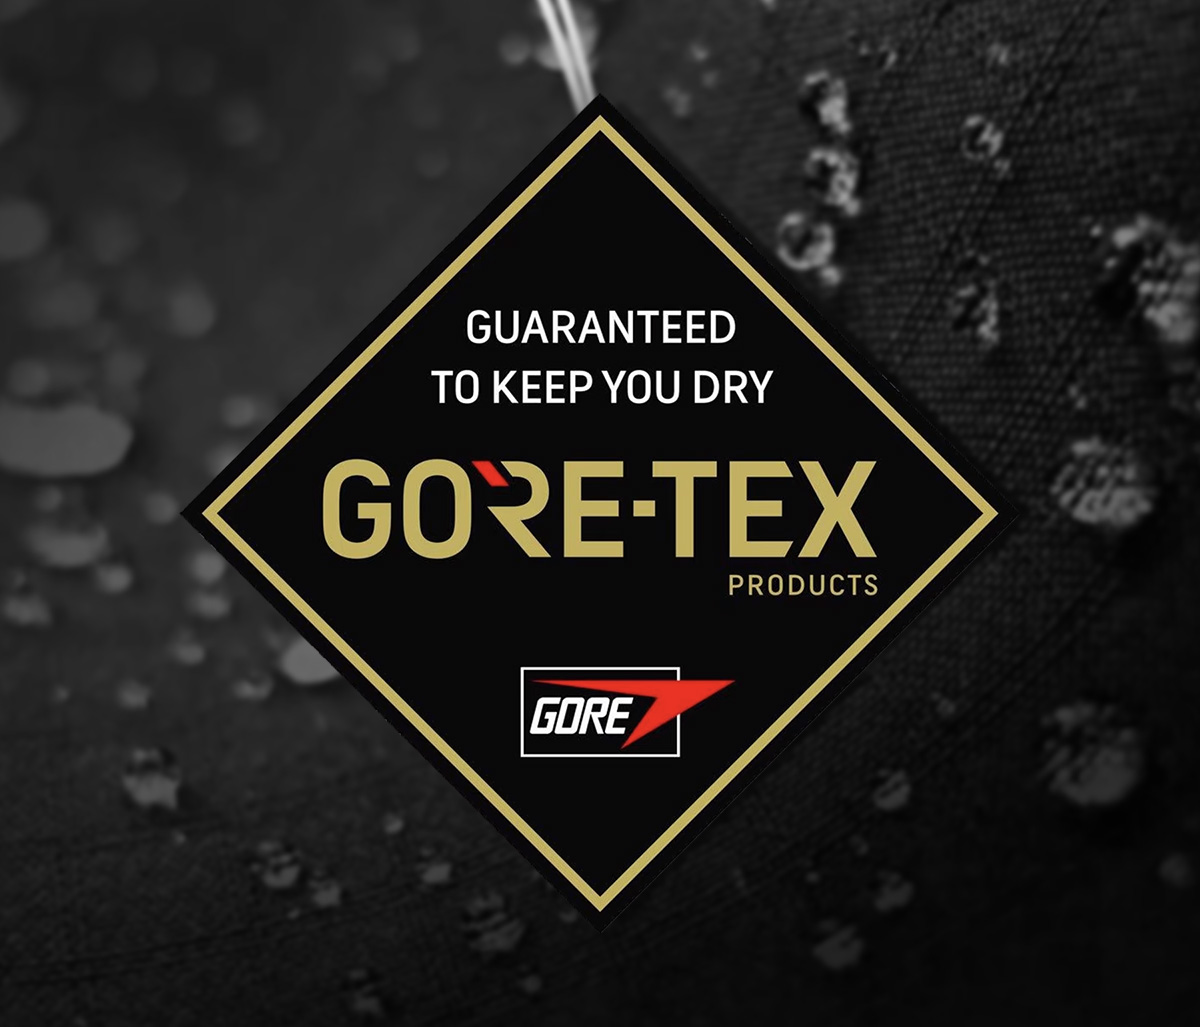 Gore-Tex guaranteed to keep you dry